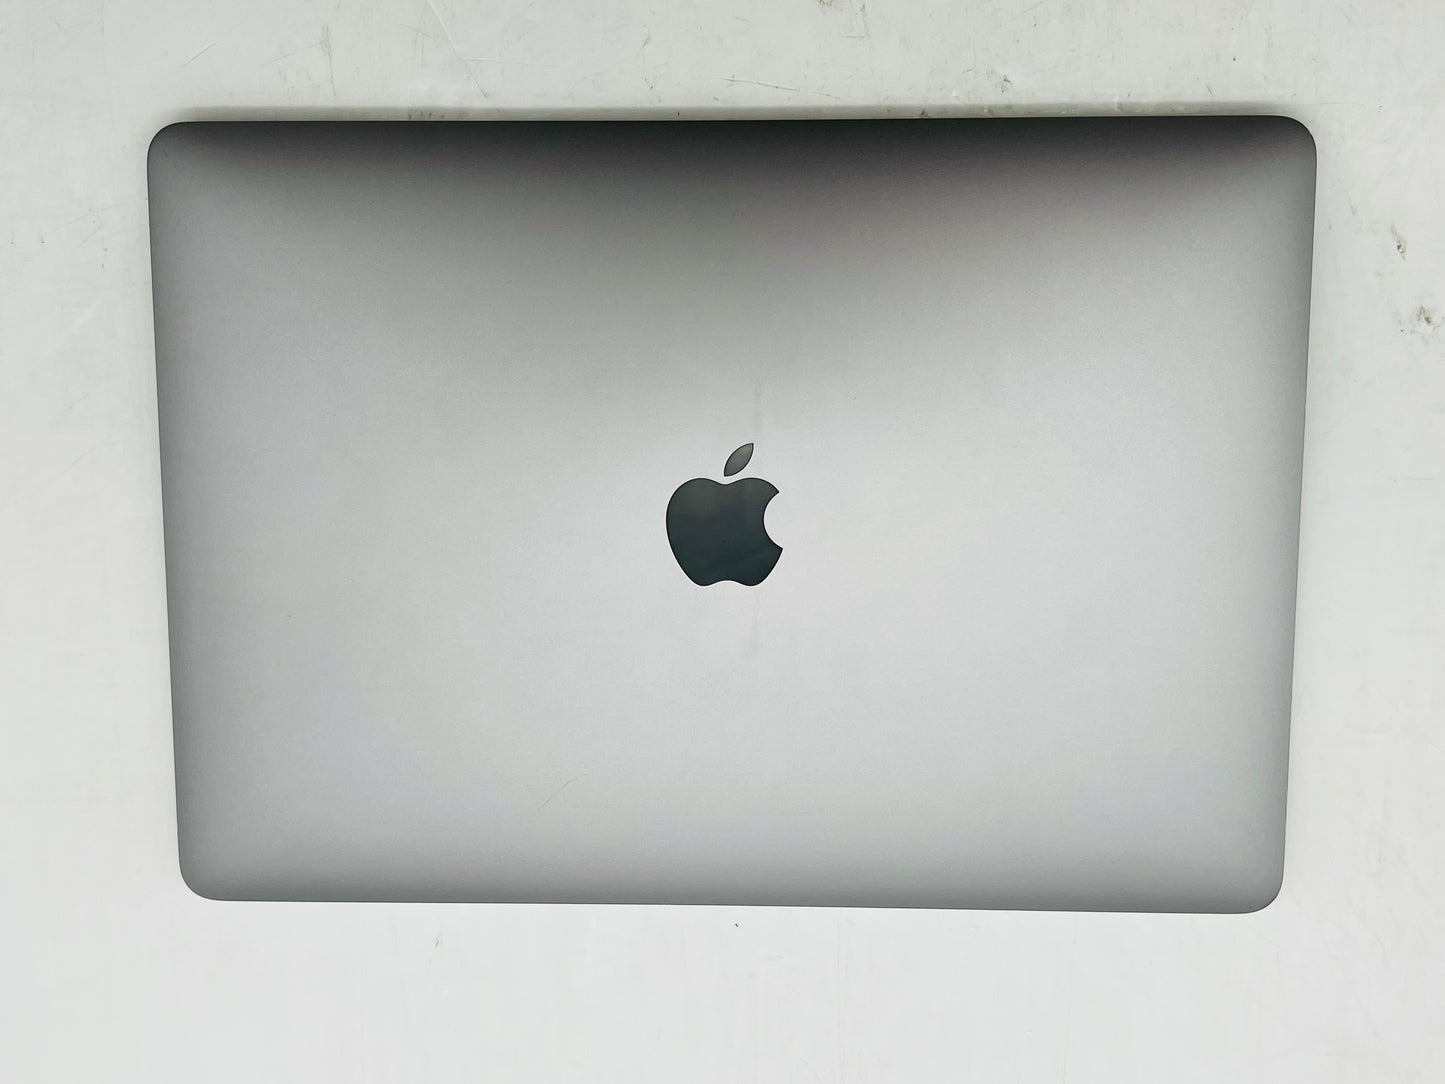 Apple 2019 MacBook Pro 13 in TB 1.7GHz Quad-Core i7 16GB RAM 128GB SSD IIPG 645